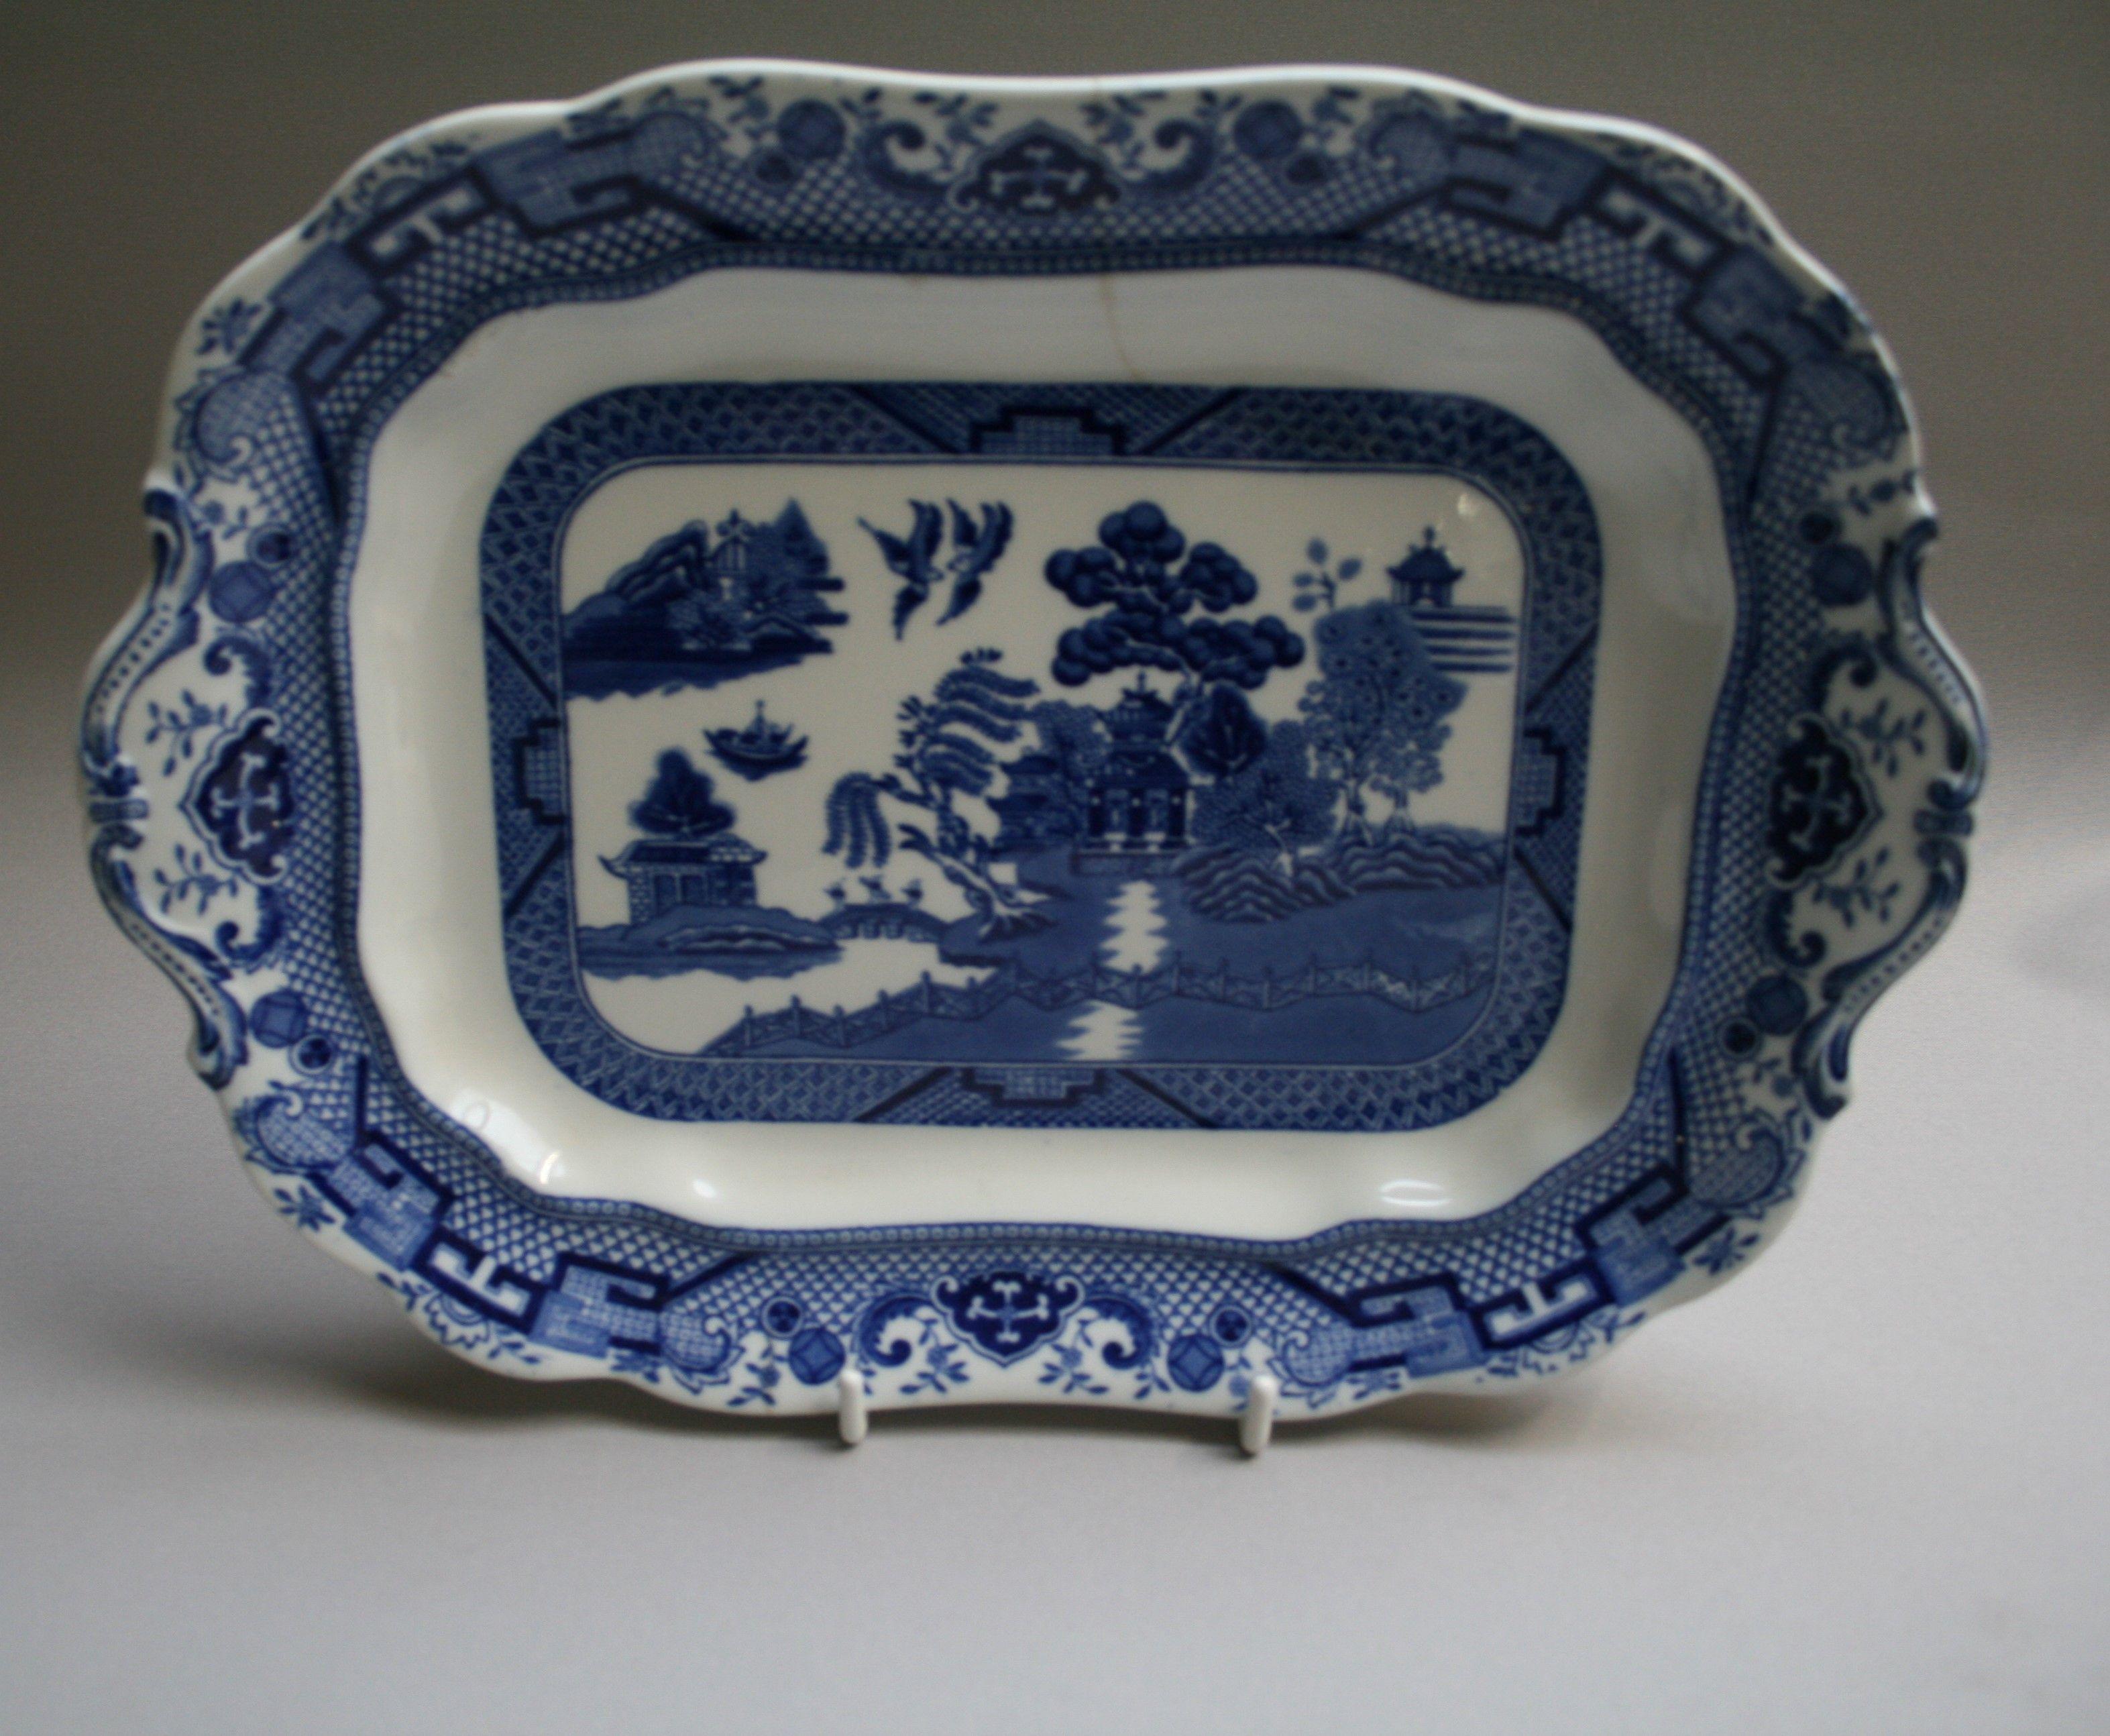 Rectangular Blue and White Logo - A heavy rectangular blue and white serving dish in the willow